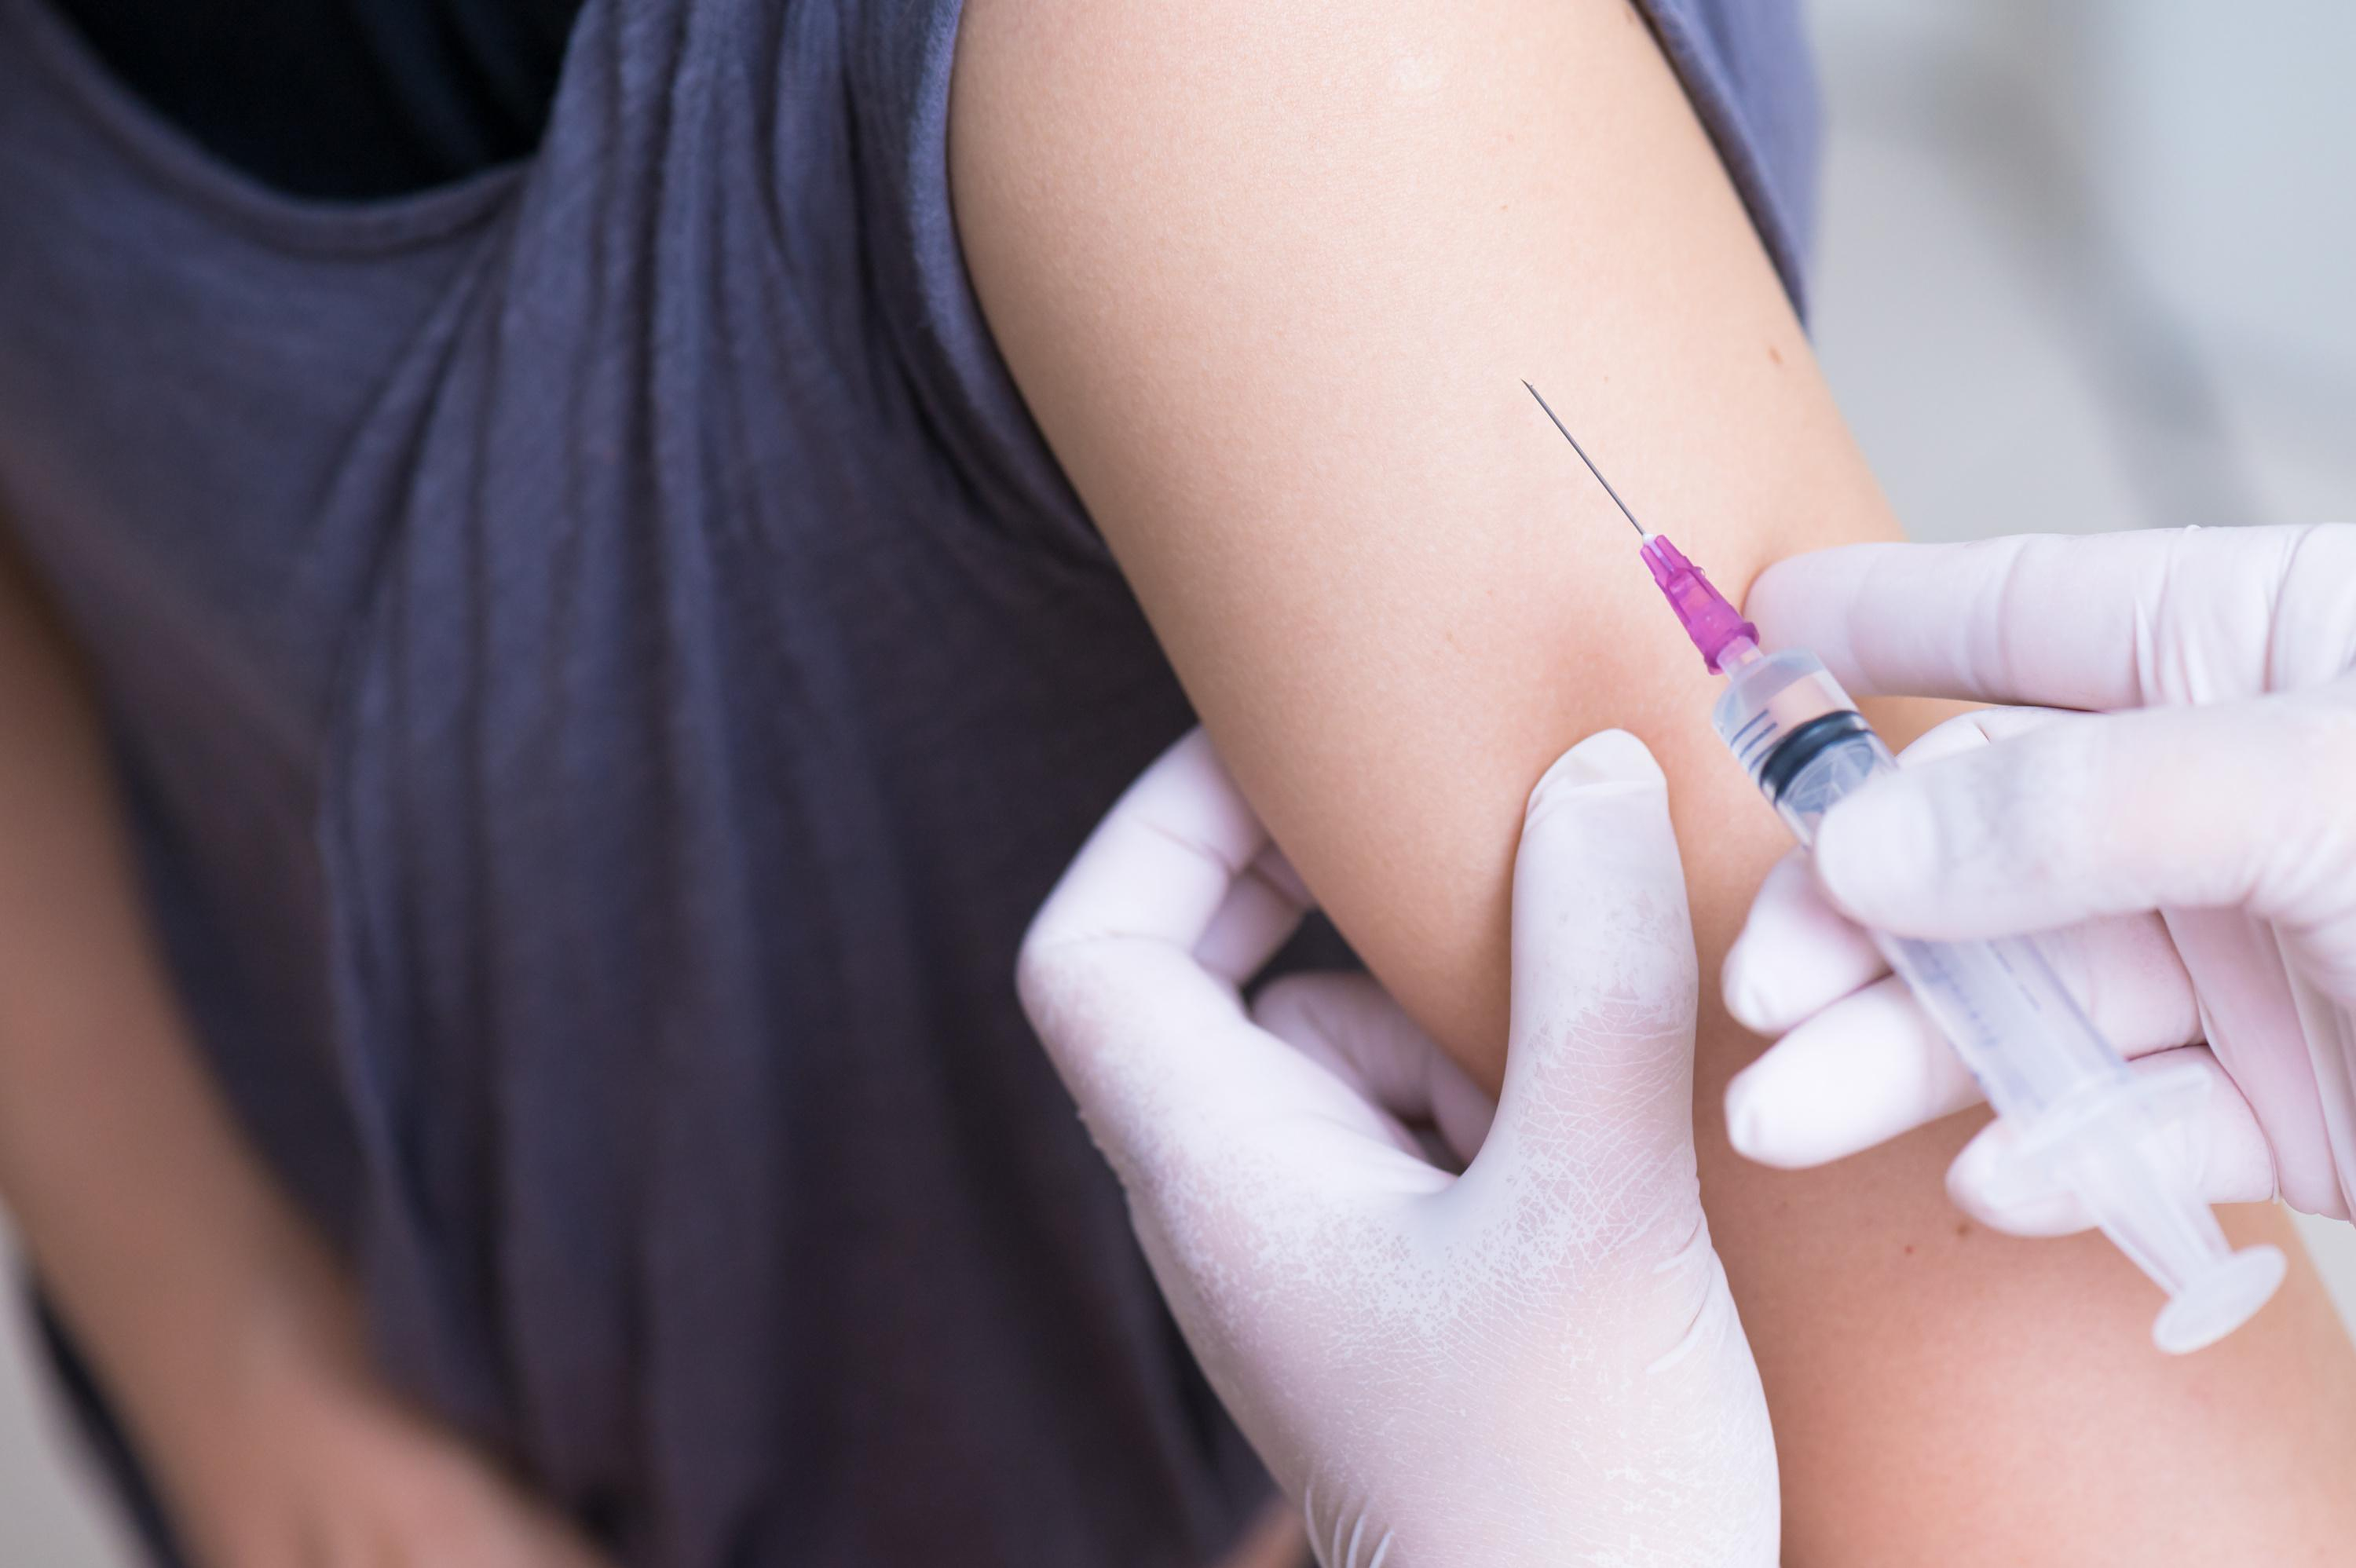 New data confirms that the papillomavirus vaccine is safe